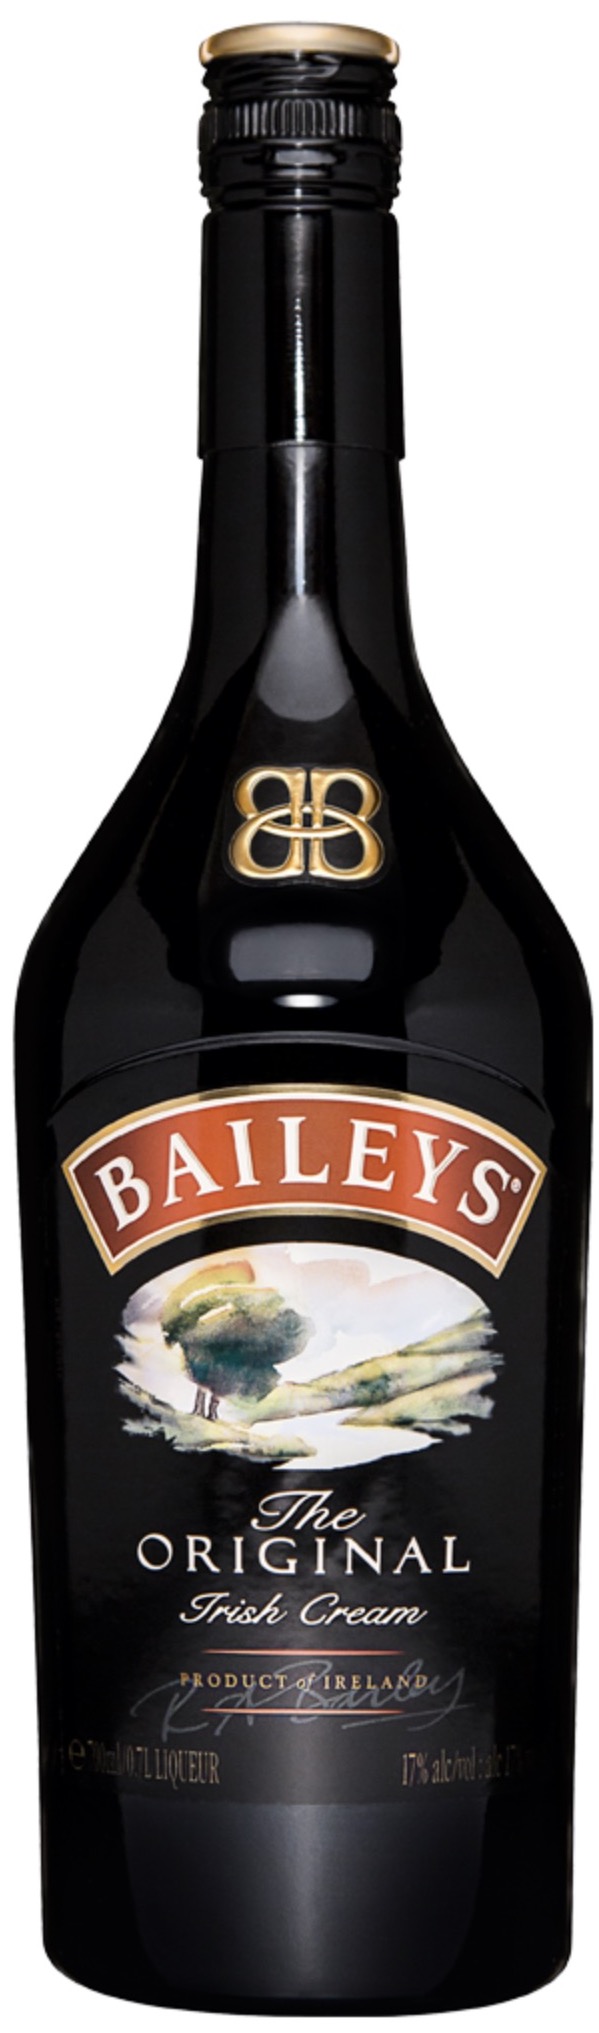 Baileys The Original Irish Cream Liqueur 17% vol. 0,7L